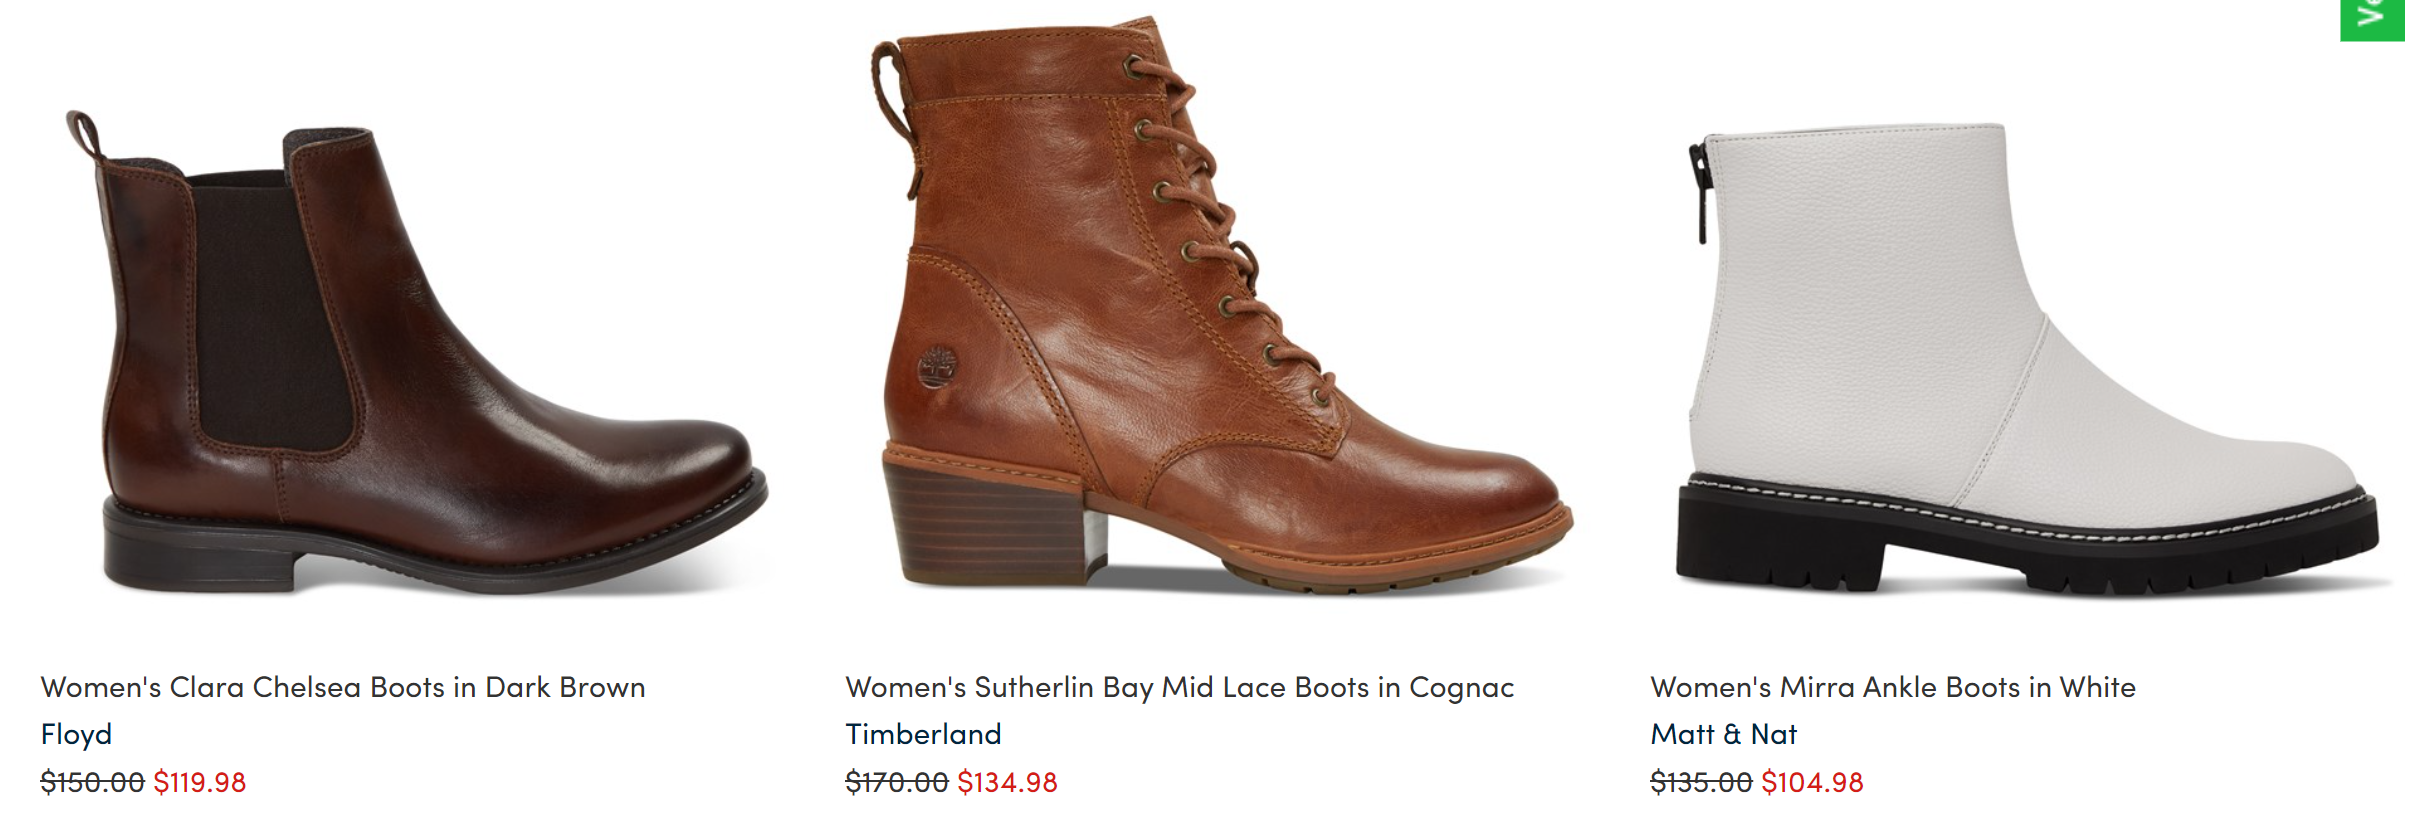 Little Burgundy冬靴低至4.8折!$120收Timberland